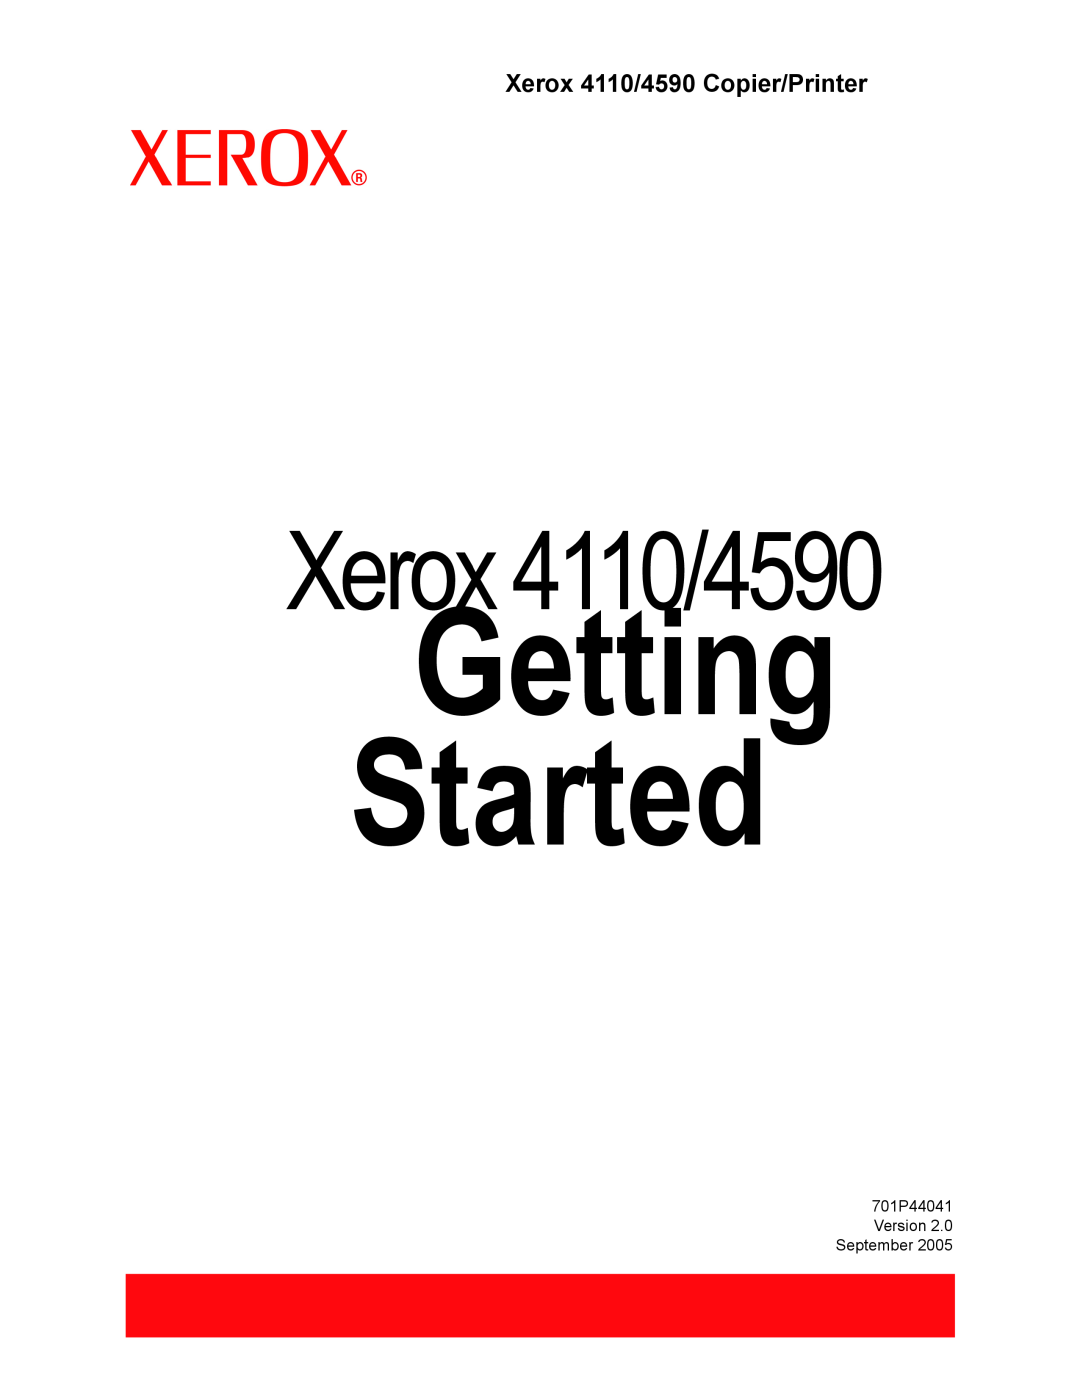 Xerox manual Getting Started, Xerox 4110/4590 Copier/Printer, 701P44041 Version 2.0 September 